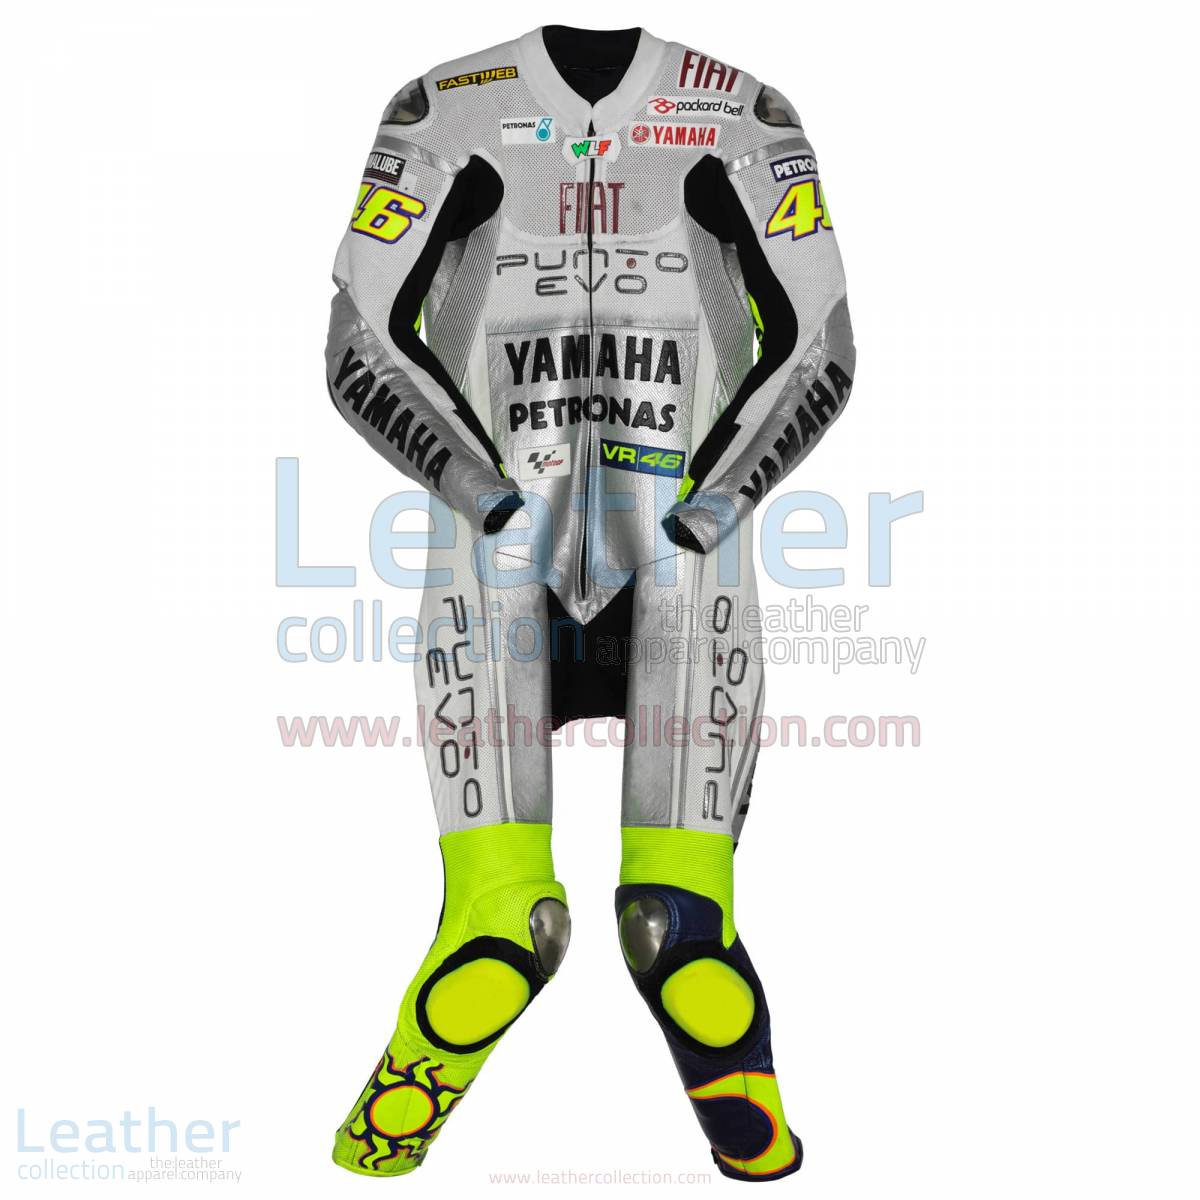 Valentino Rossi Yamaha Fiat 2009 Racing Suit